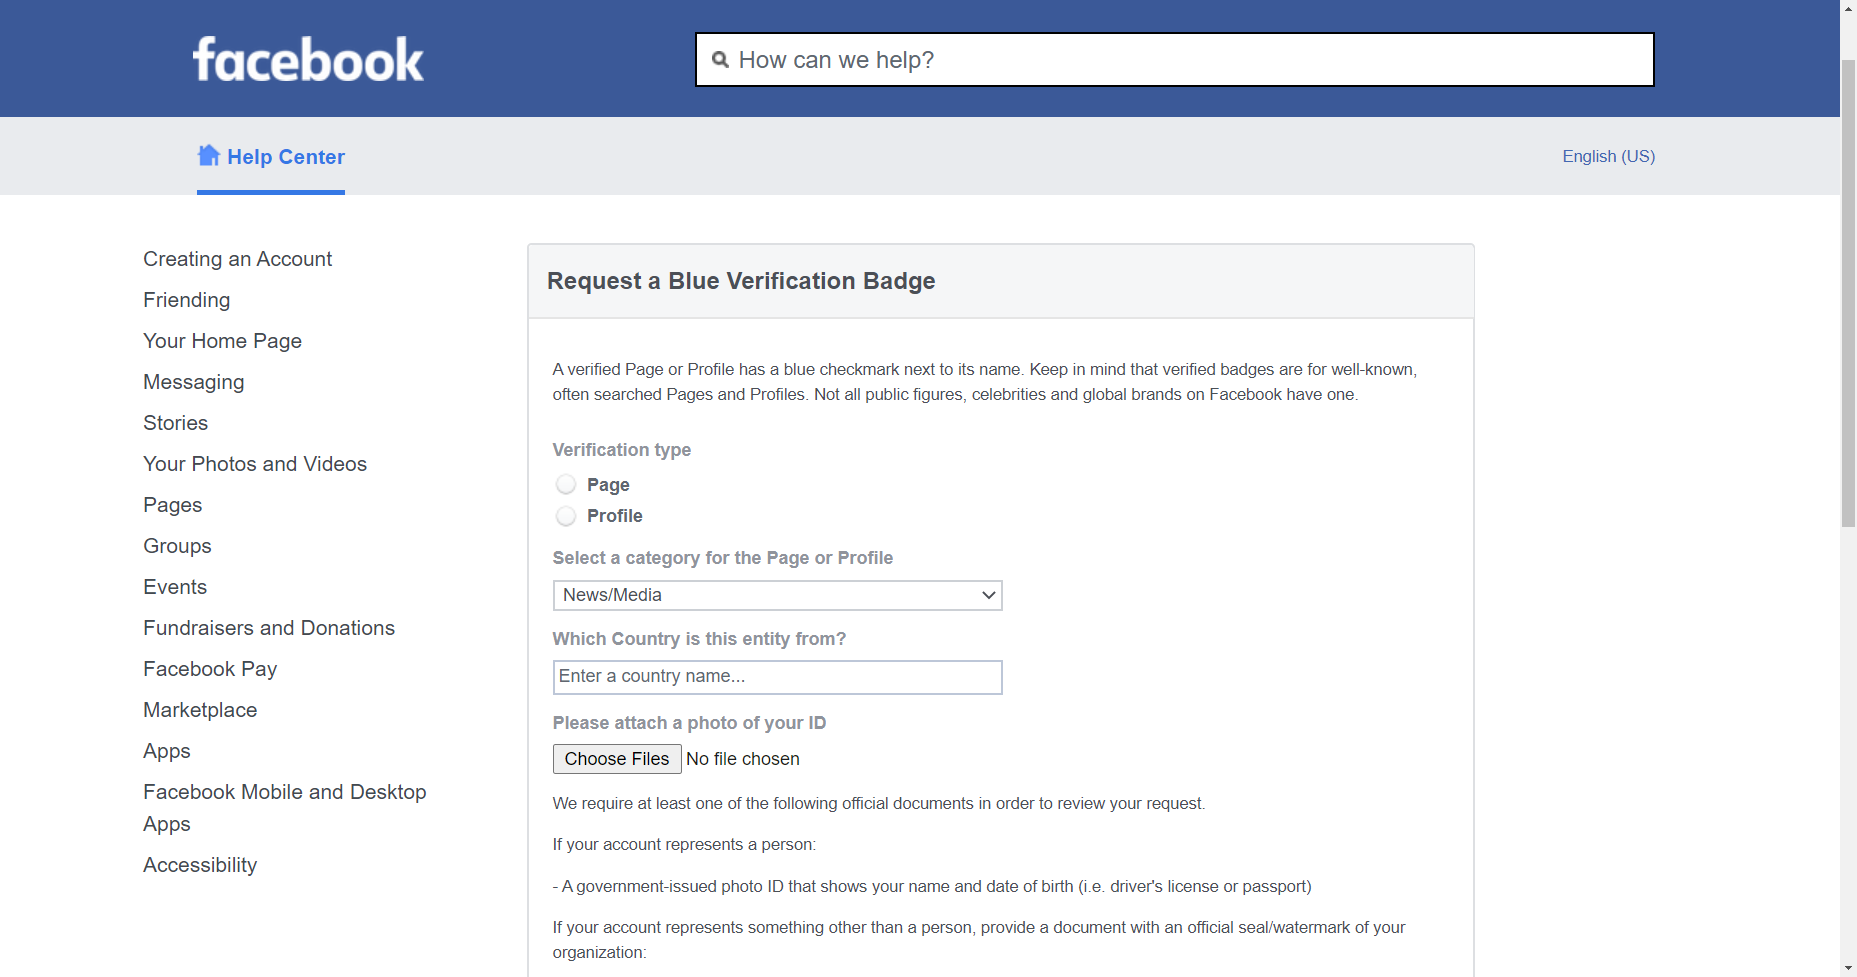 Verification Process Tweaked for Facebook, Instagram